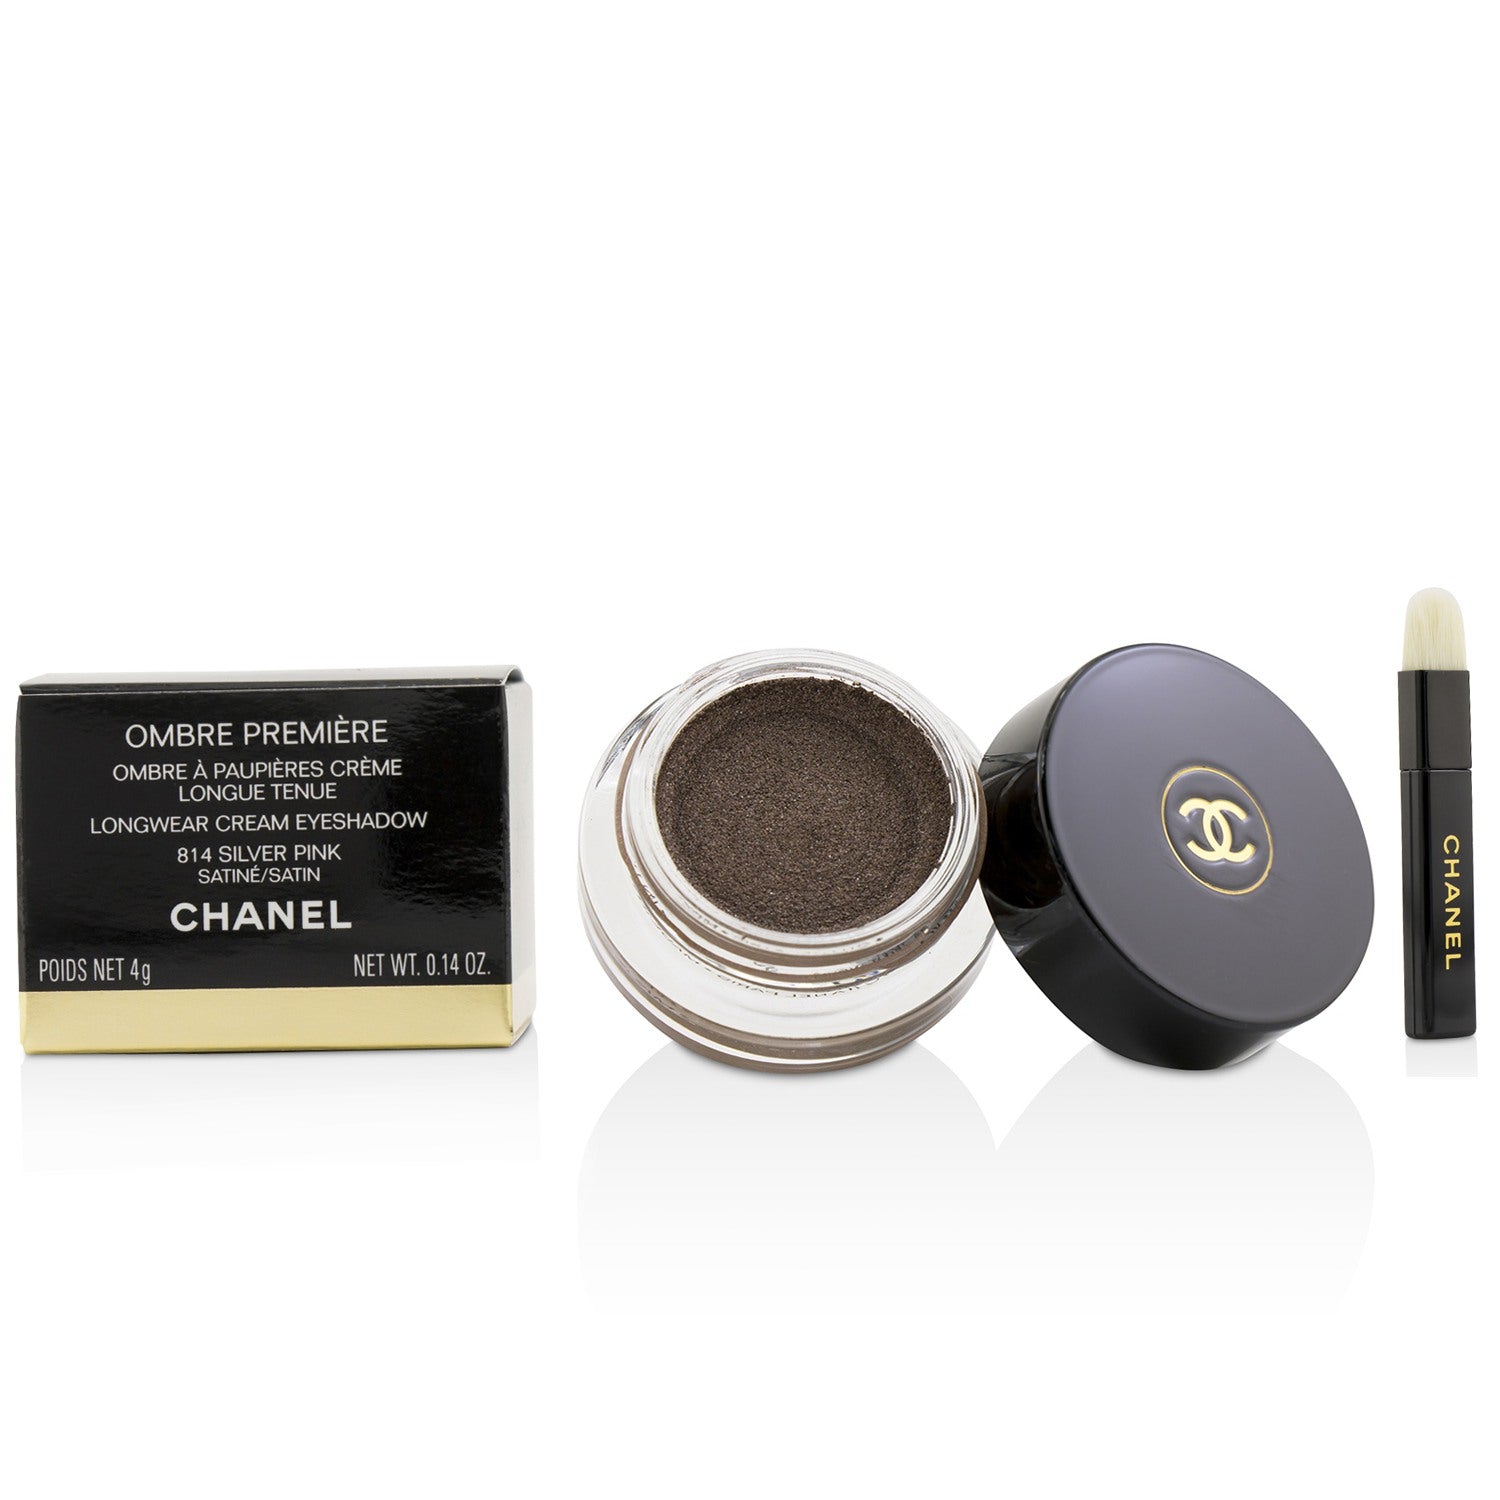 du er Slumkvarter bytte rundt Ombre Premiere Longwear Cream Eyeshadow for Sale | Chanel, Make Up, Buy Now  – Author